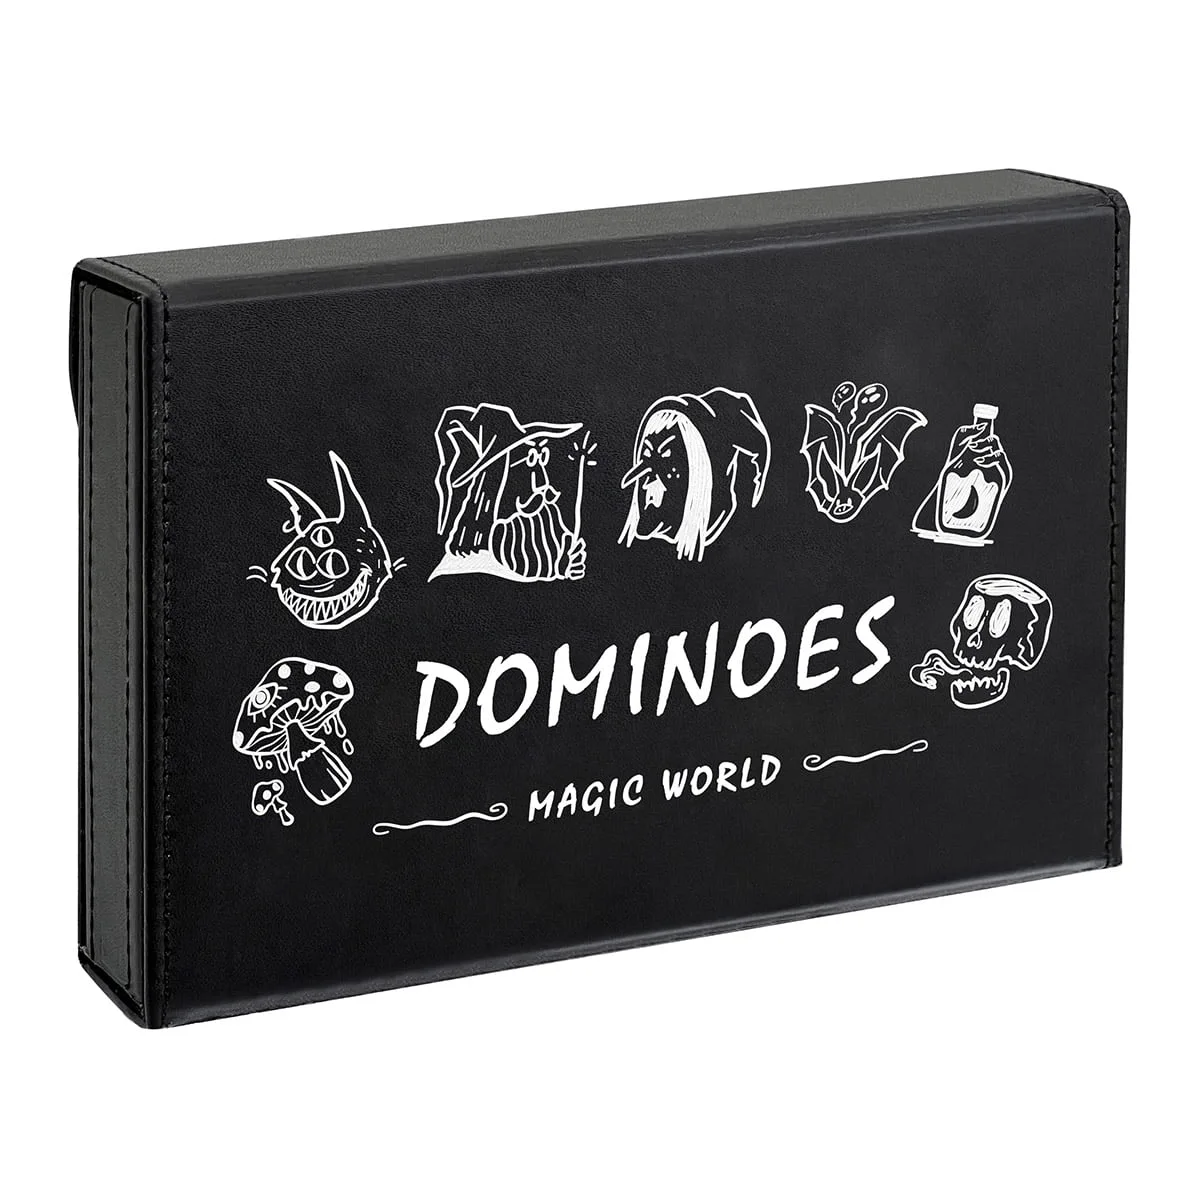 Conjunto de dominó Magic World com estojo de couro sintético